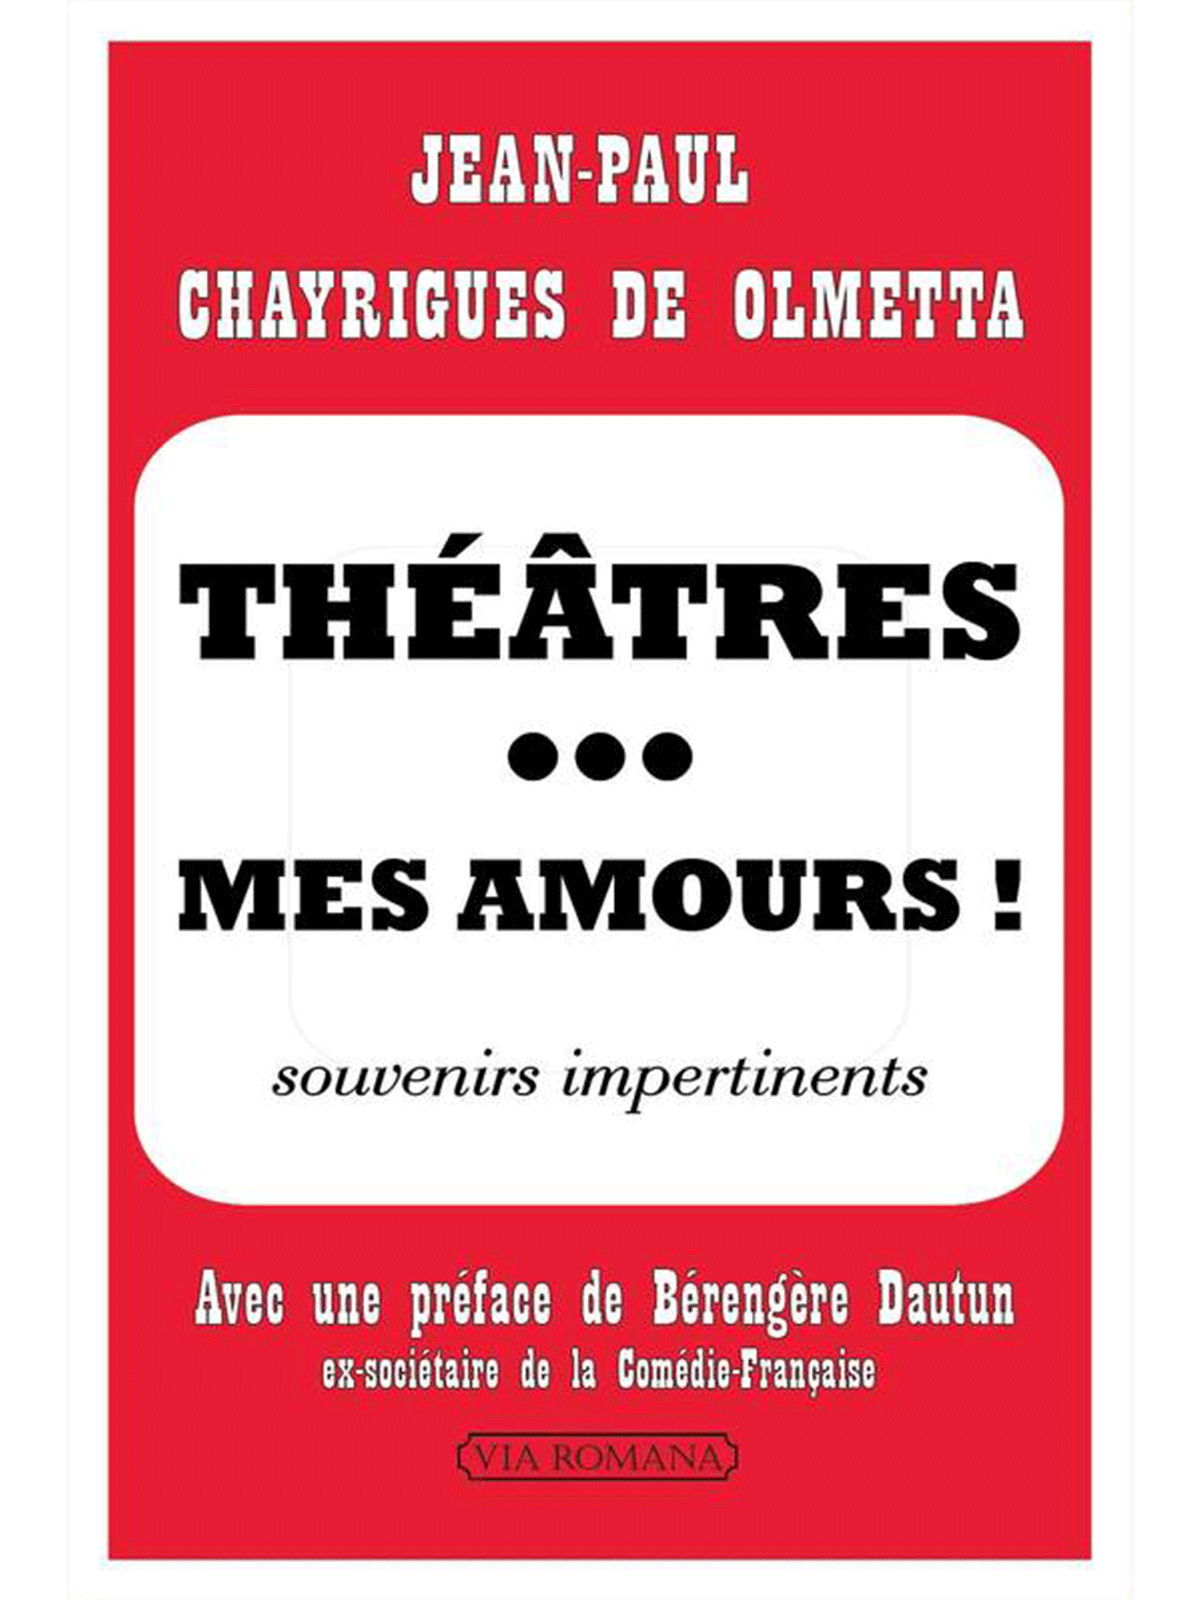 Jean-Paul Chayrigues de Olmetta : Théâtres... mes amours. Souvenirs impertinents